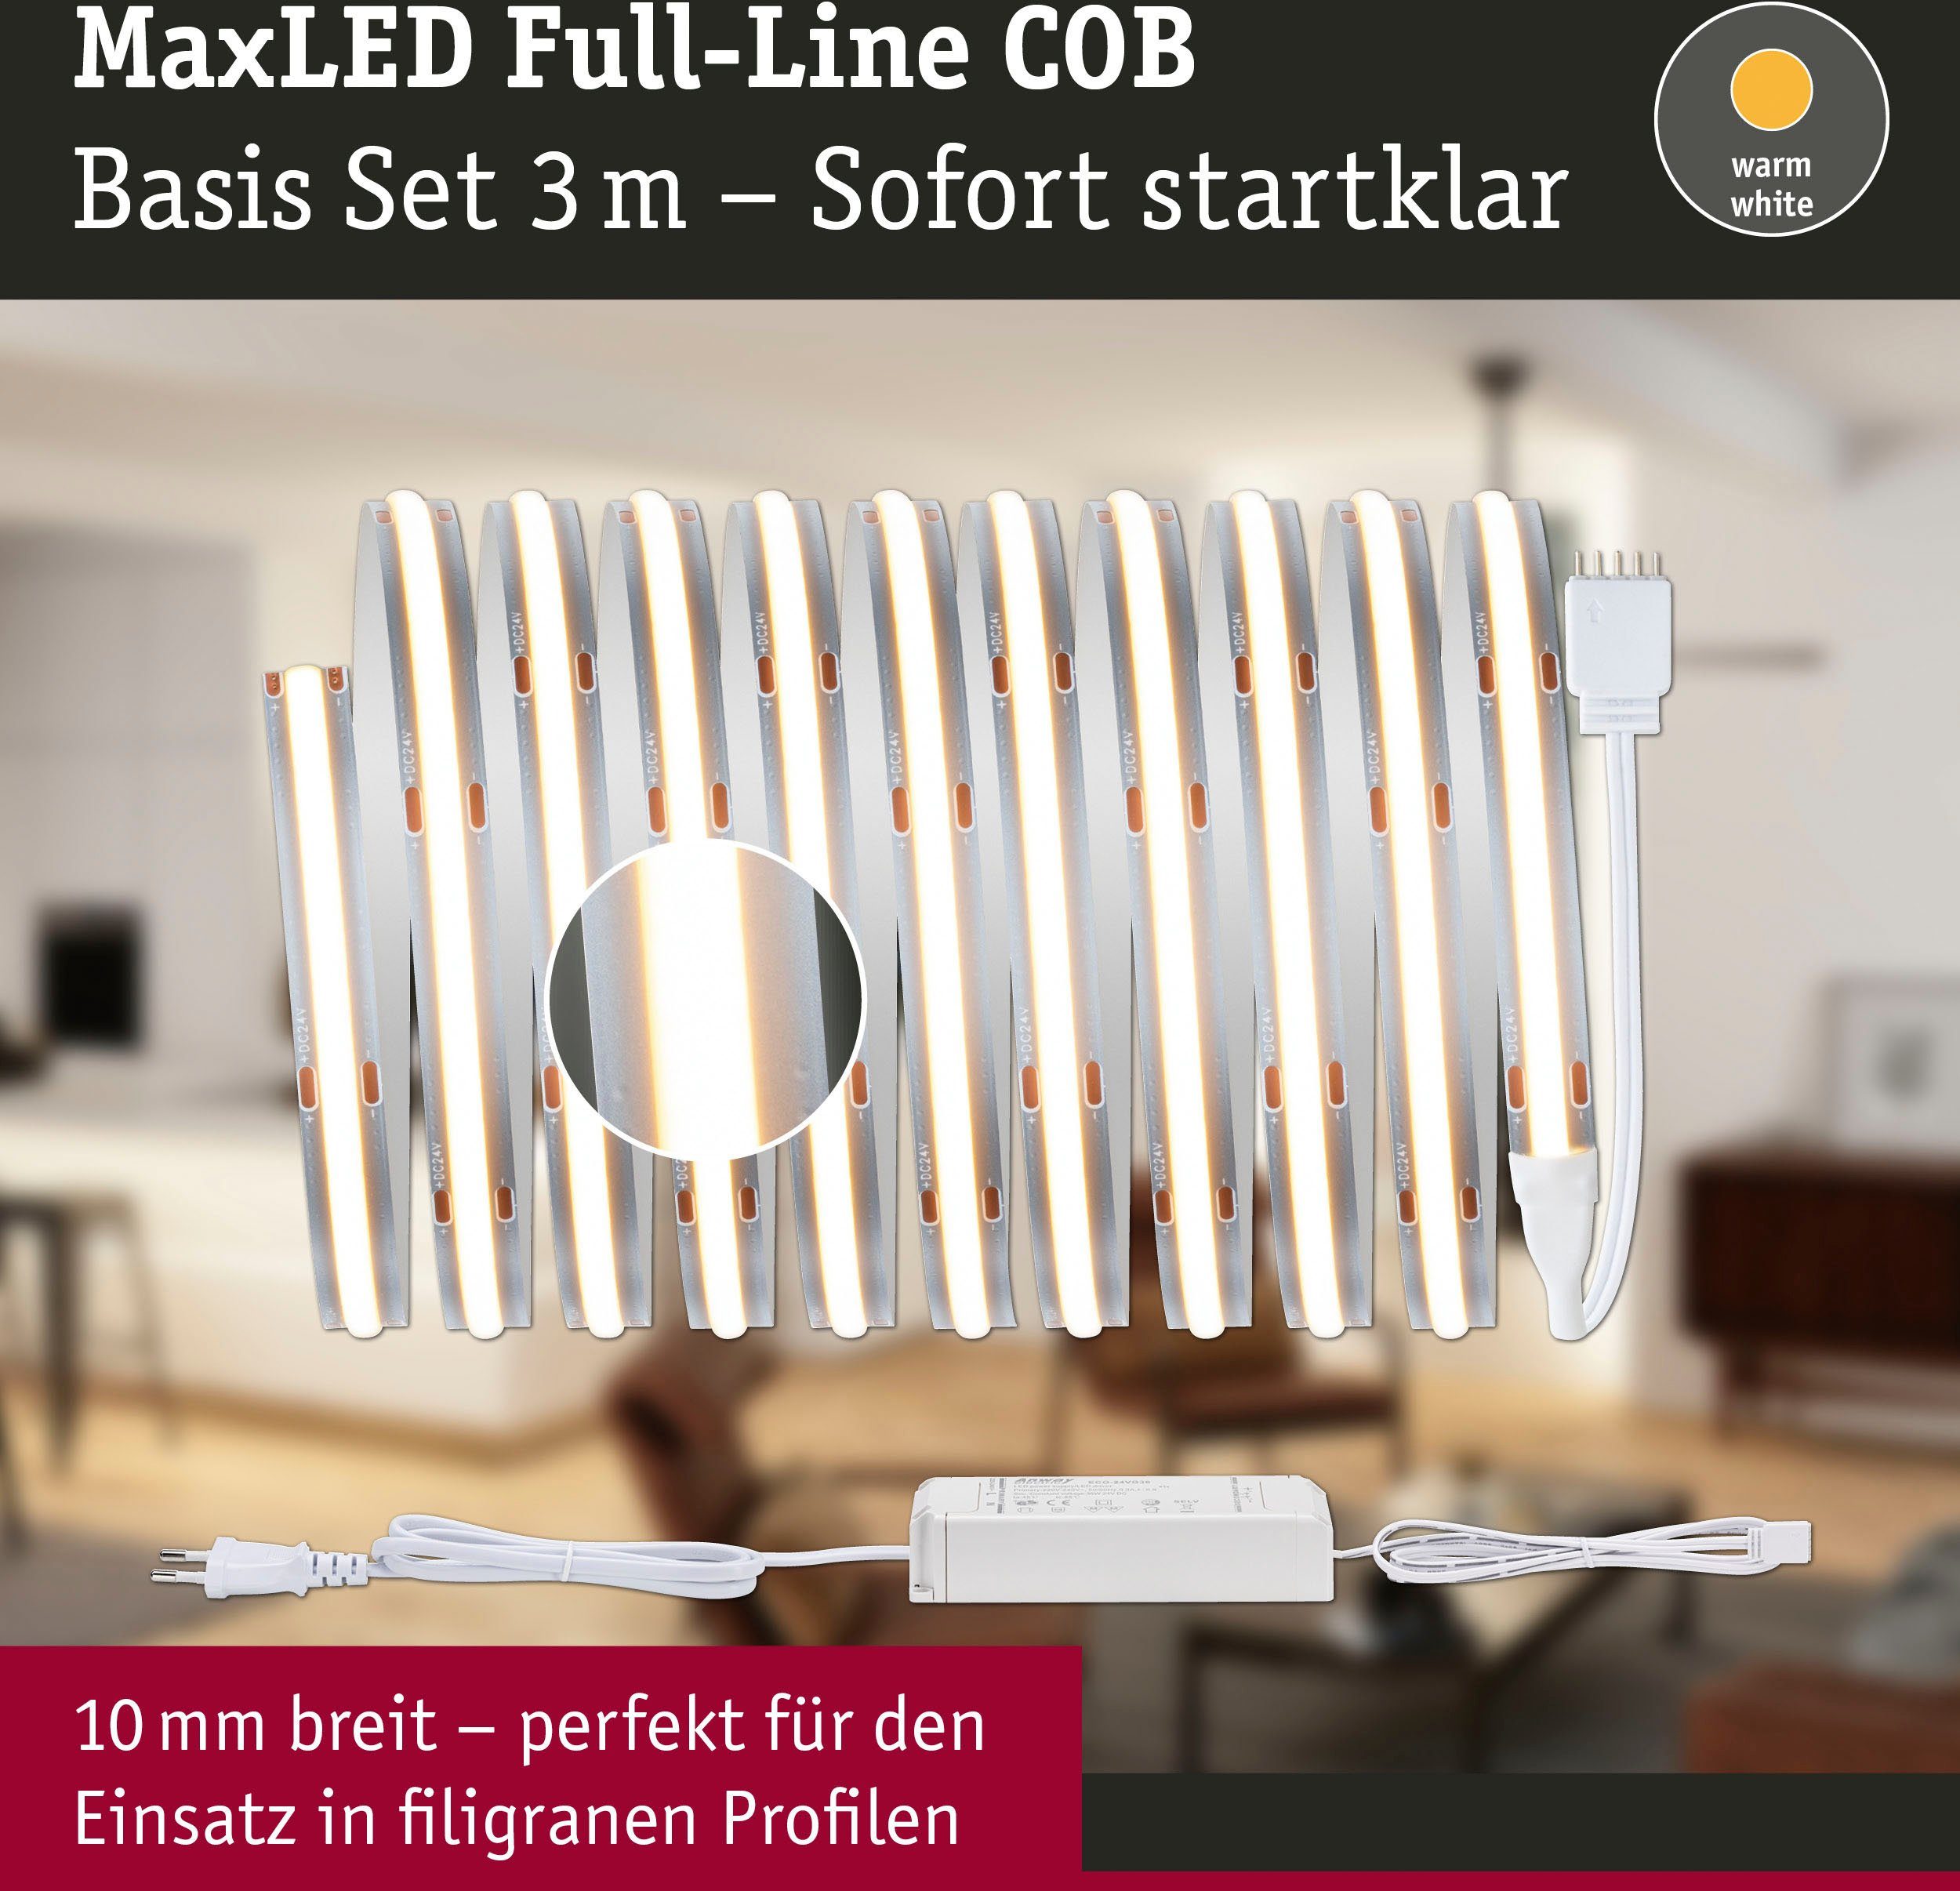 500 Paulmann COB MaxLED 2700K, 1500lm Warmweiß Full-Line 3m Basisset Basisset 1-flammig, LED-Streifen 19W 480LED